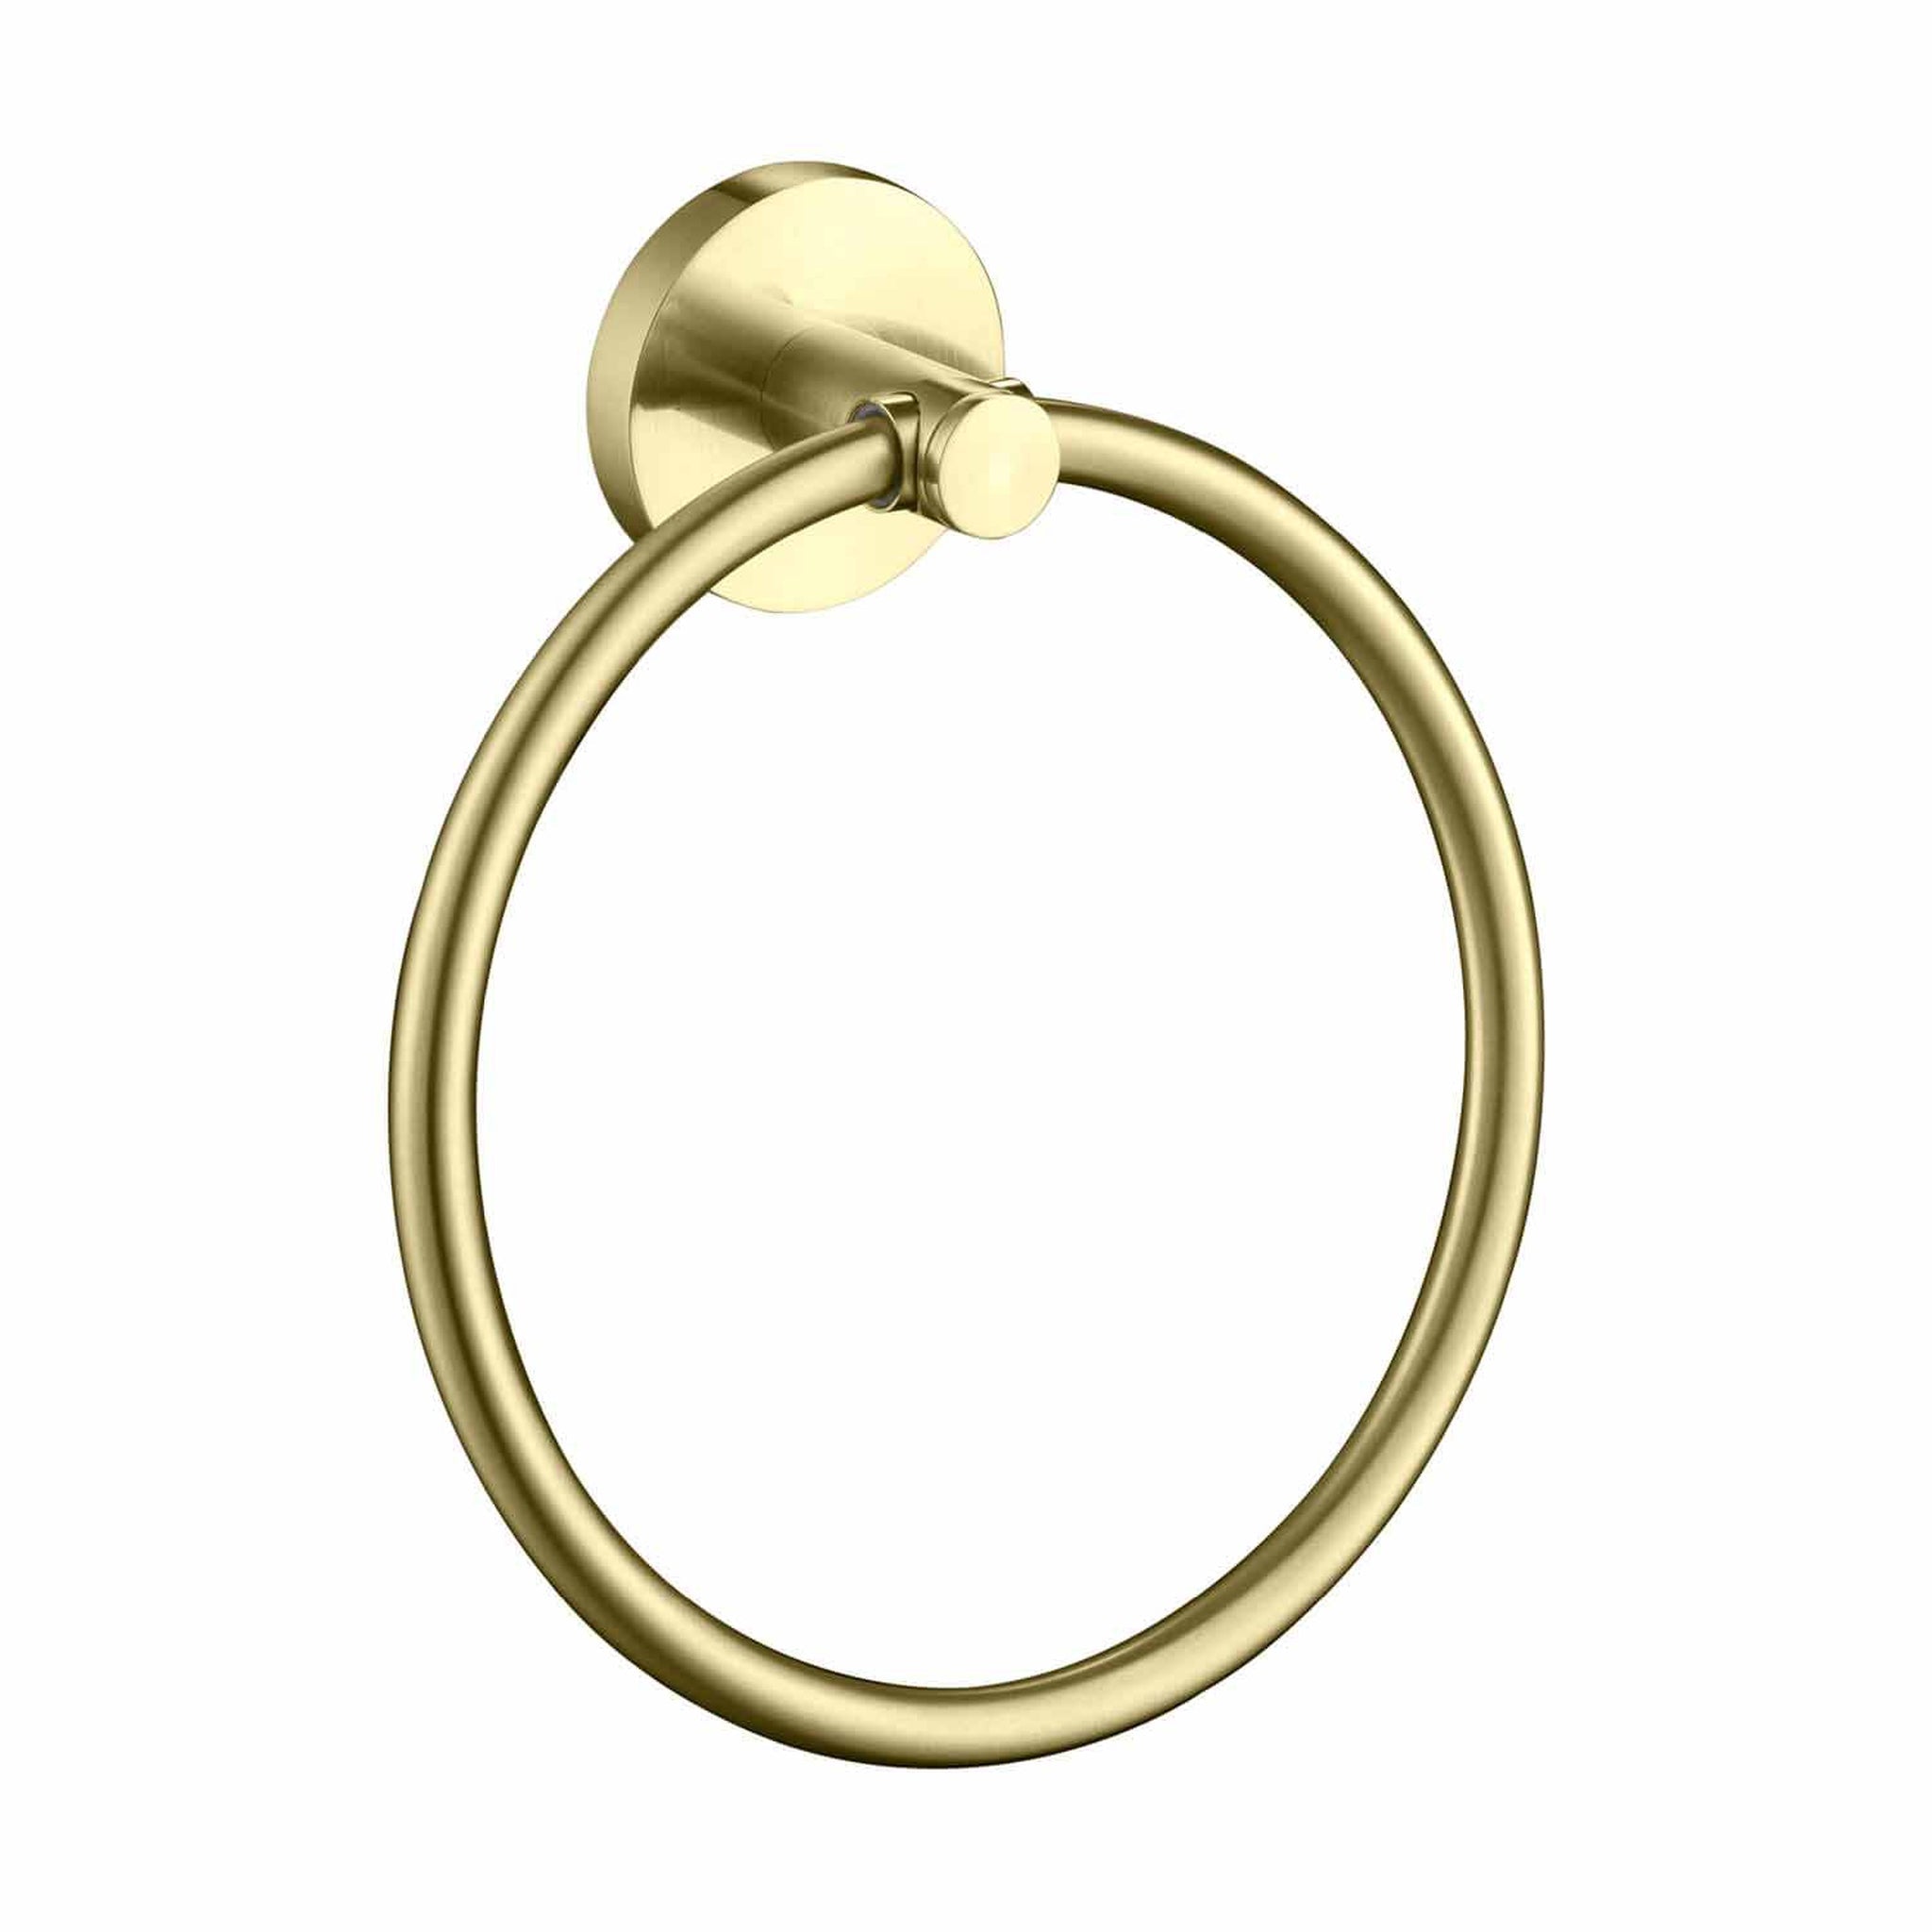 KIBI, KIBI Circular Brass Bathroom Towel Ring in Brushed Gold Finish